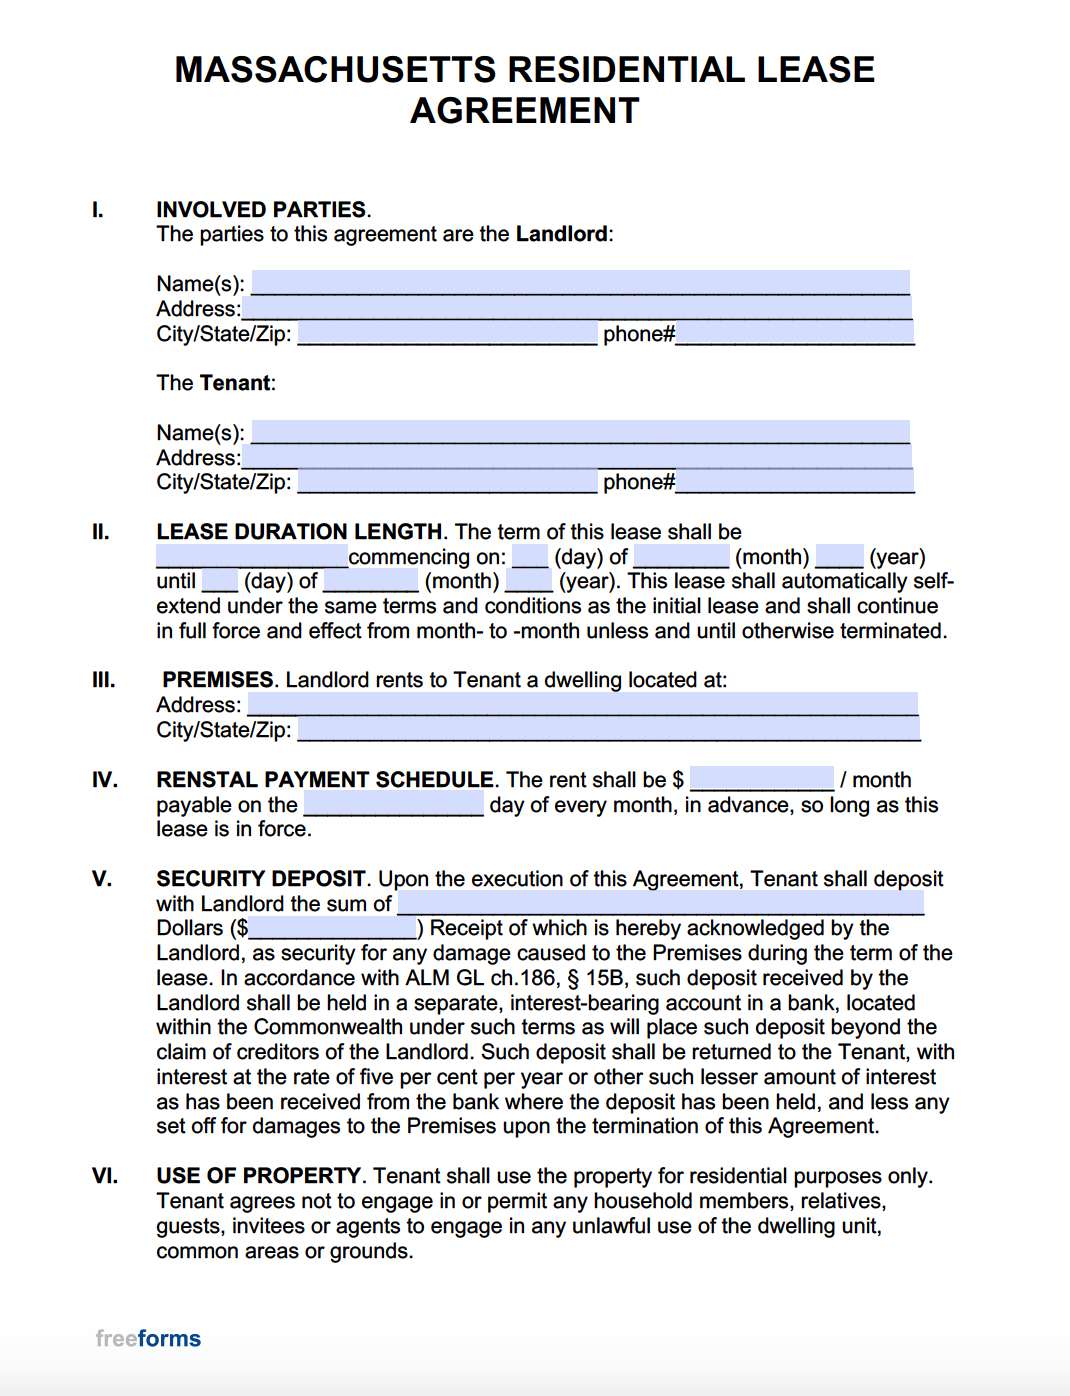 Massachusetts residential appliance installer license prep class download the last version for ios